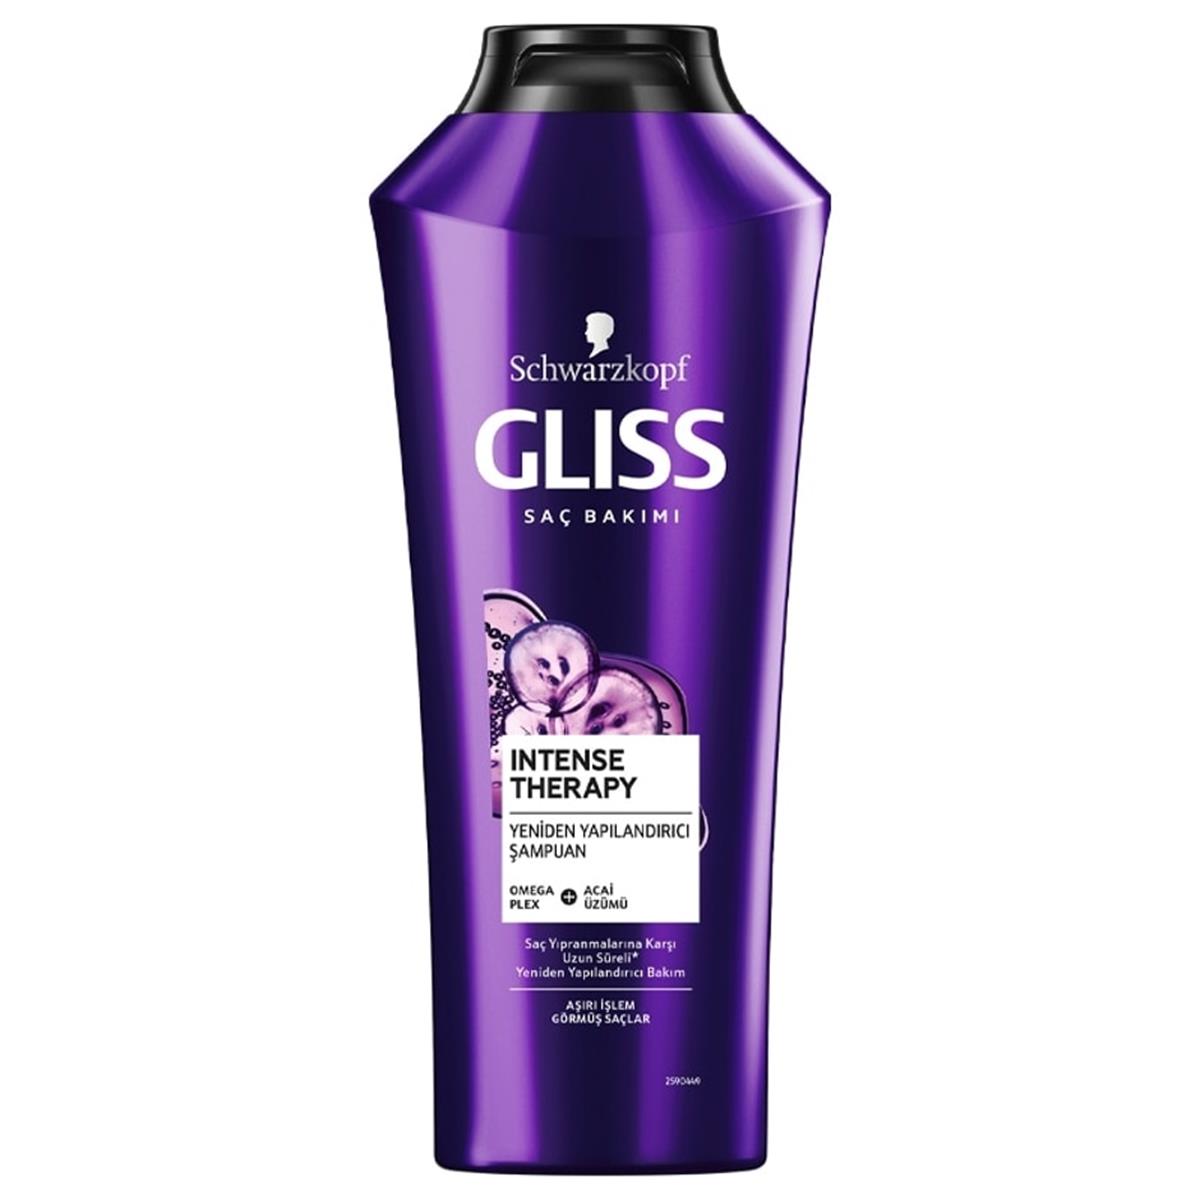 GLISS Intense Therapy Yeniden Yapilandirici Şampuan 360 Ml